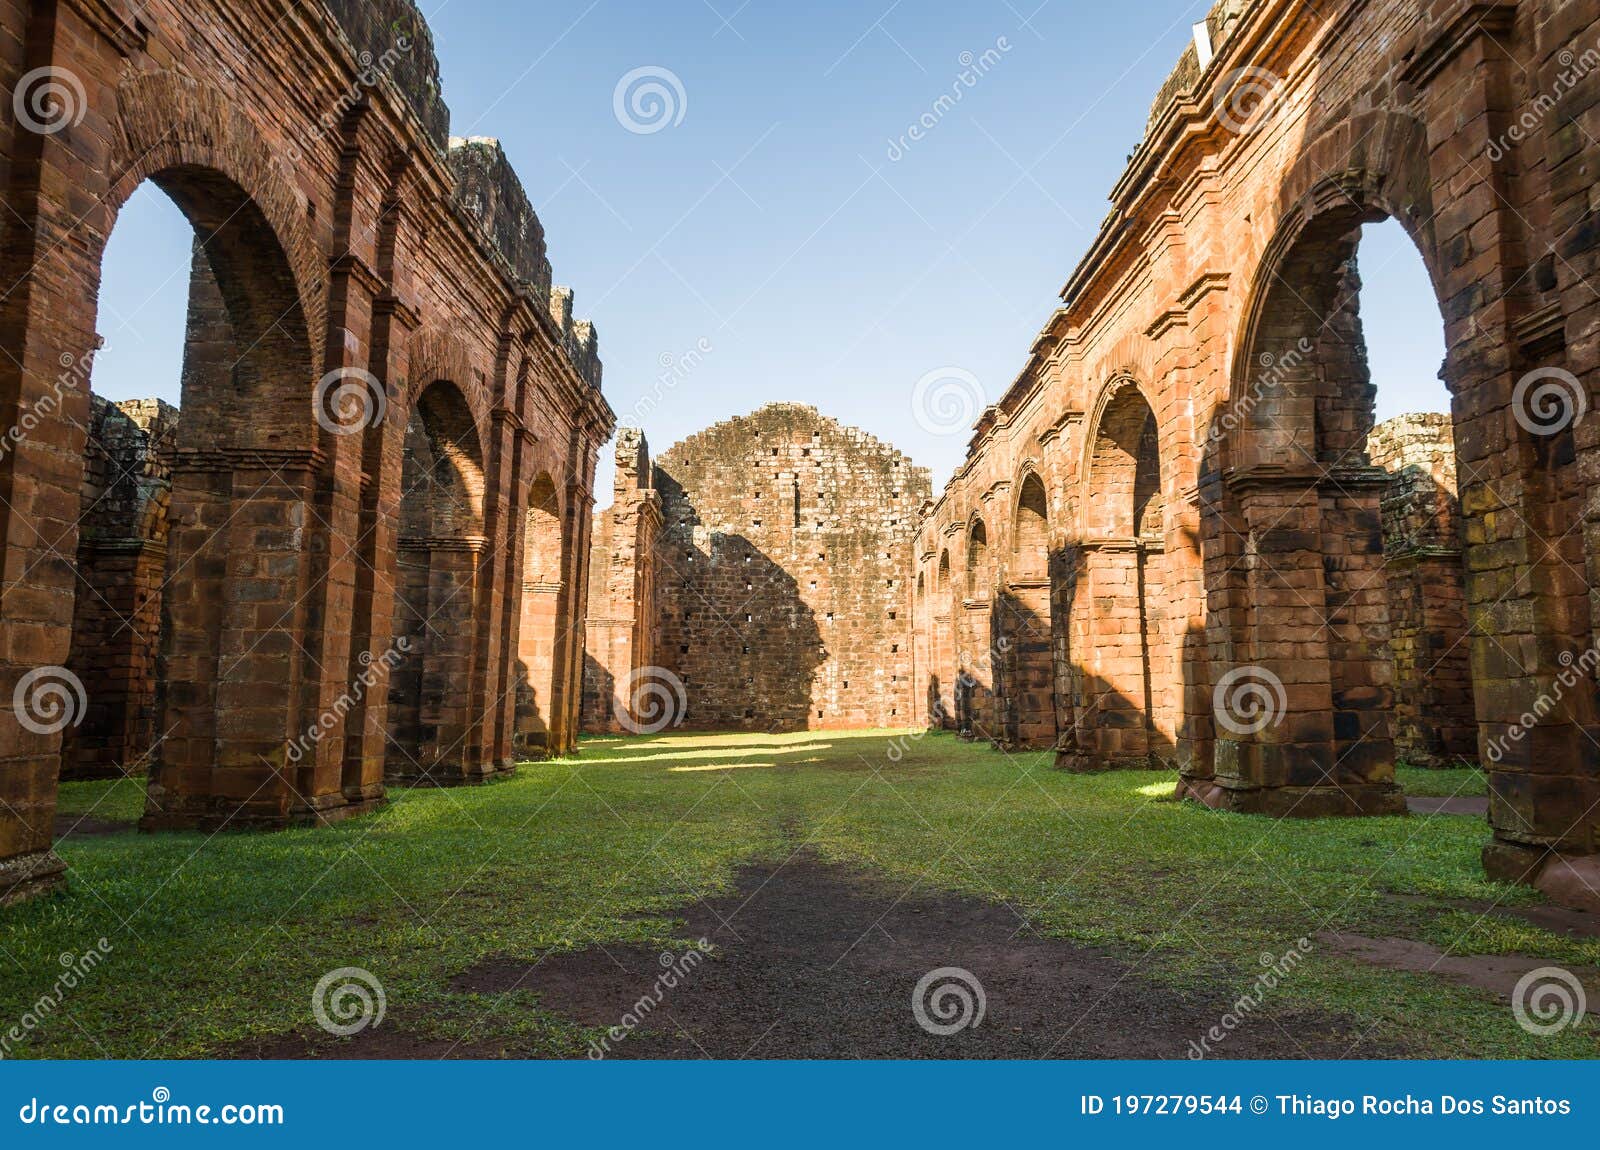 part of the unesco site - jesuit missions of the guaranis: church, ruins of sao miguel das missoe, rio grande do sul, brazil